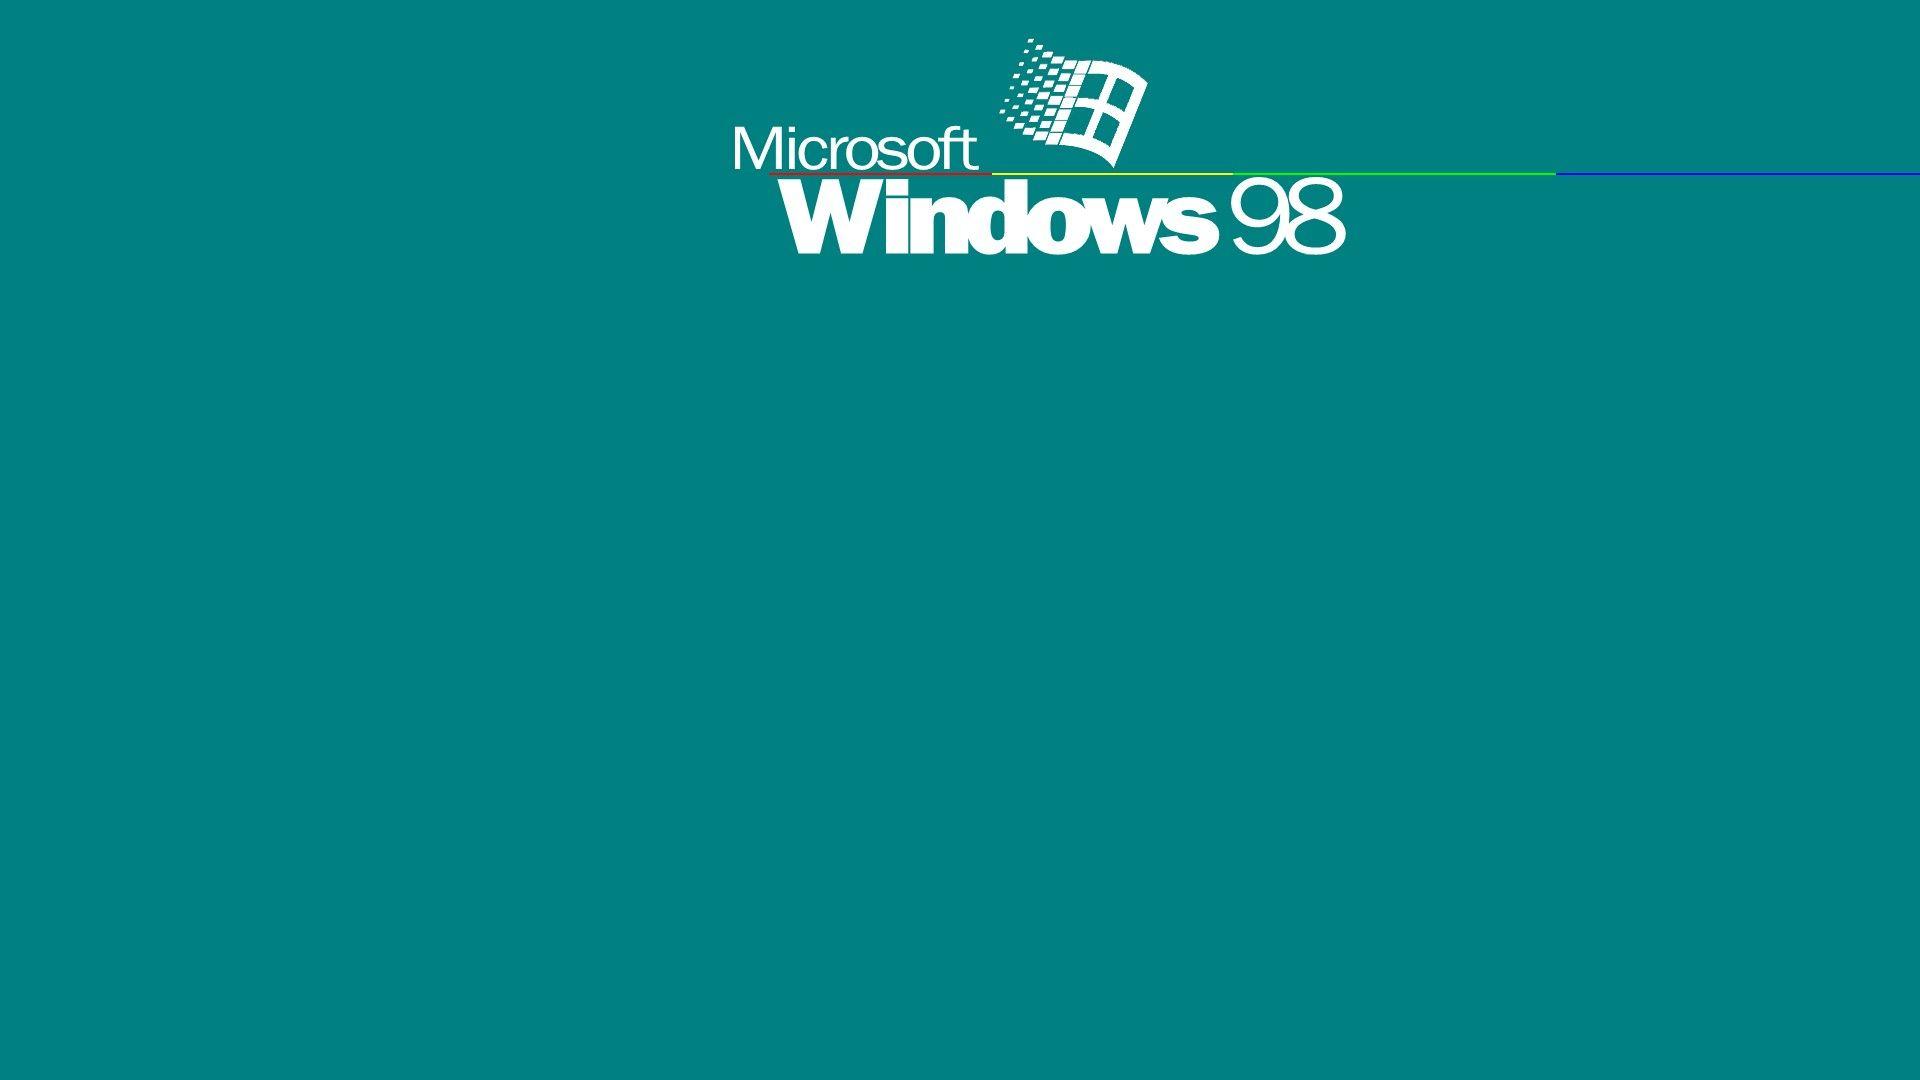 Windows 98 wallpaperDownload free amazing HD background